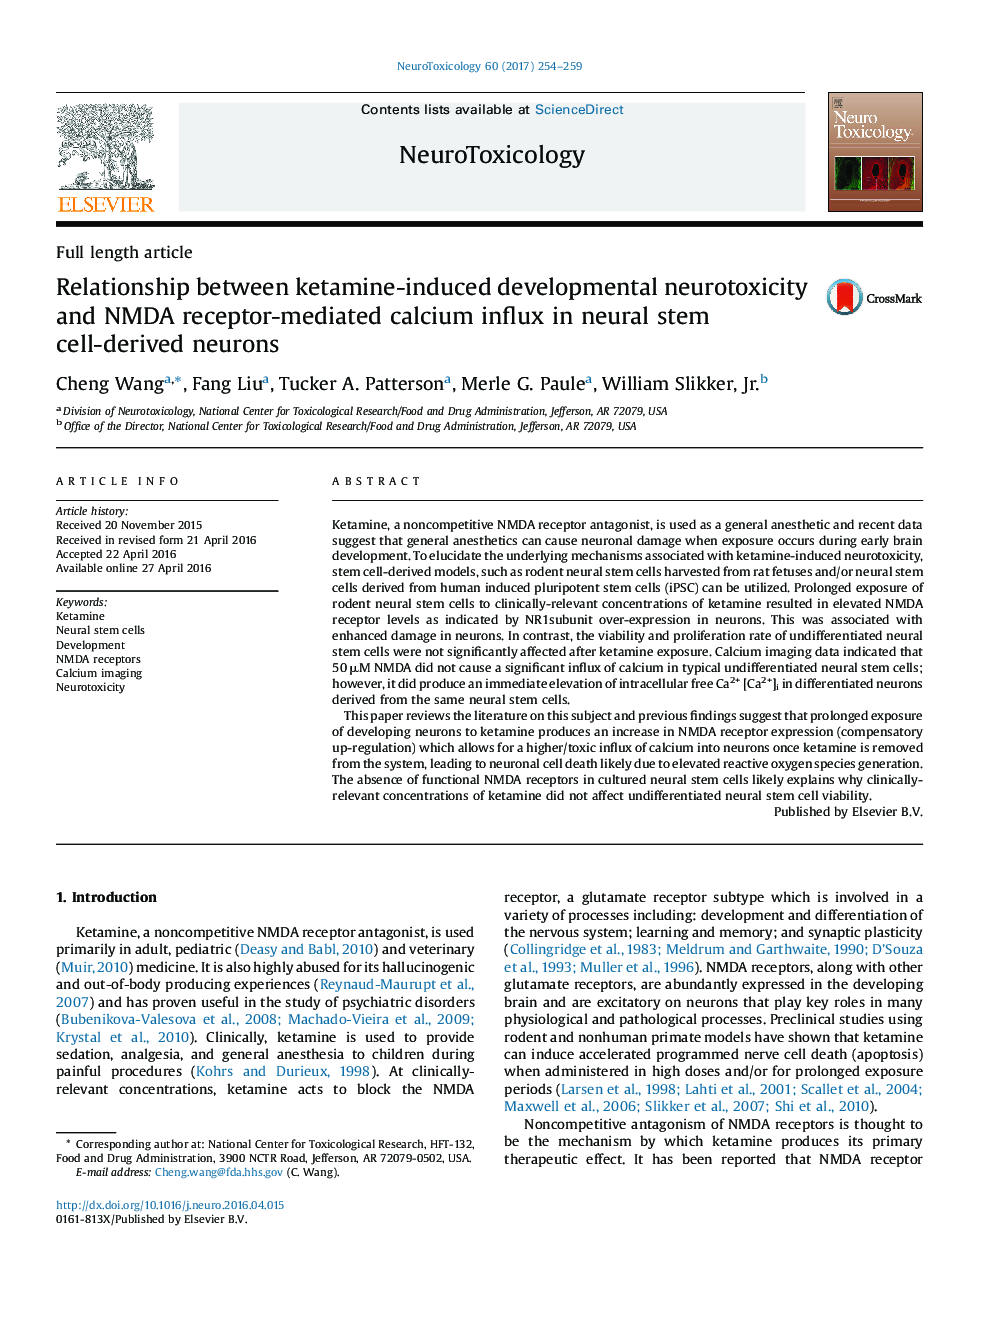 Relationship between ketamine-induced developmental neurotoxicity and NMDA receptor-mediated calcium influx in neural stem cell-derived neurons